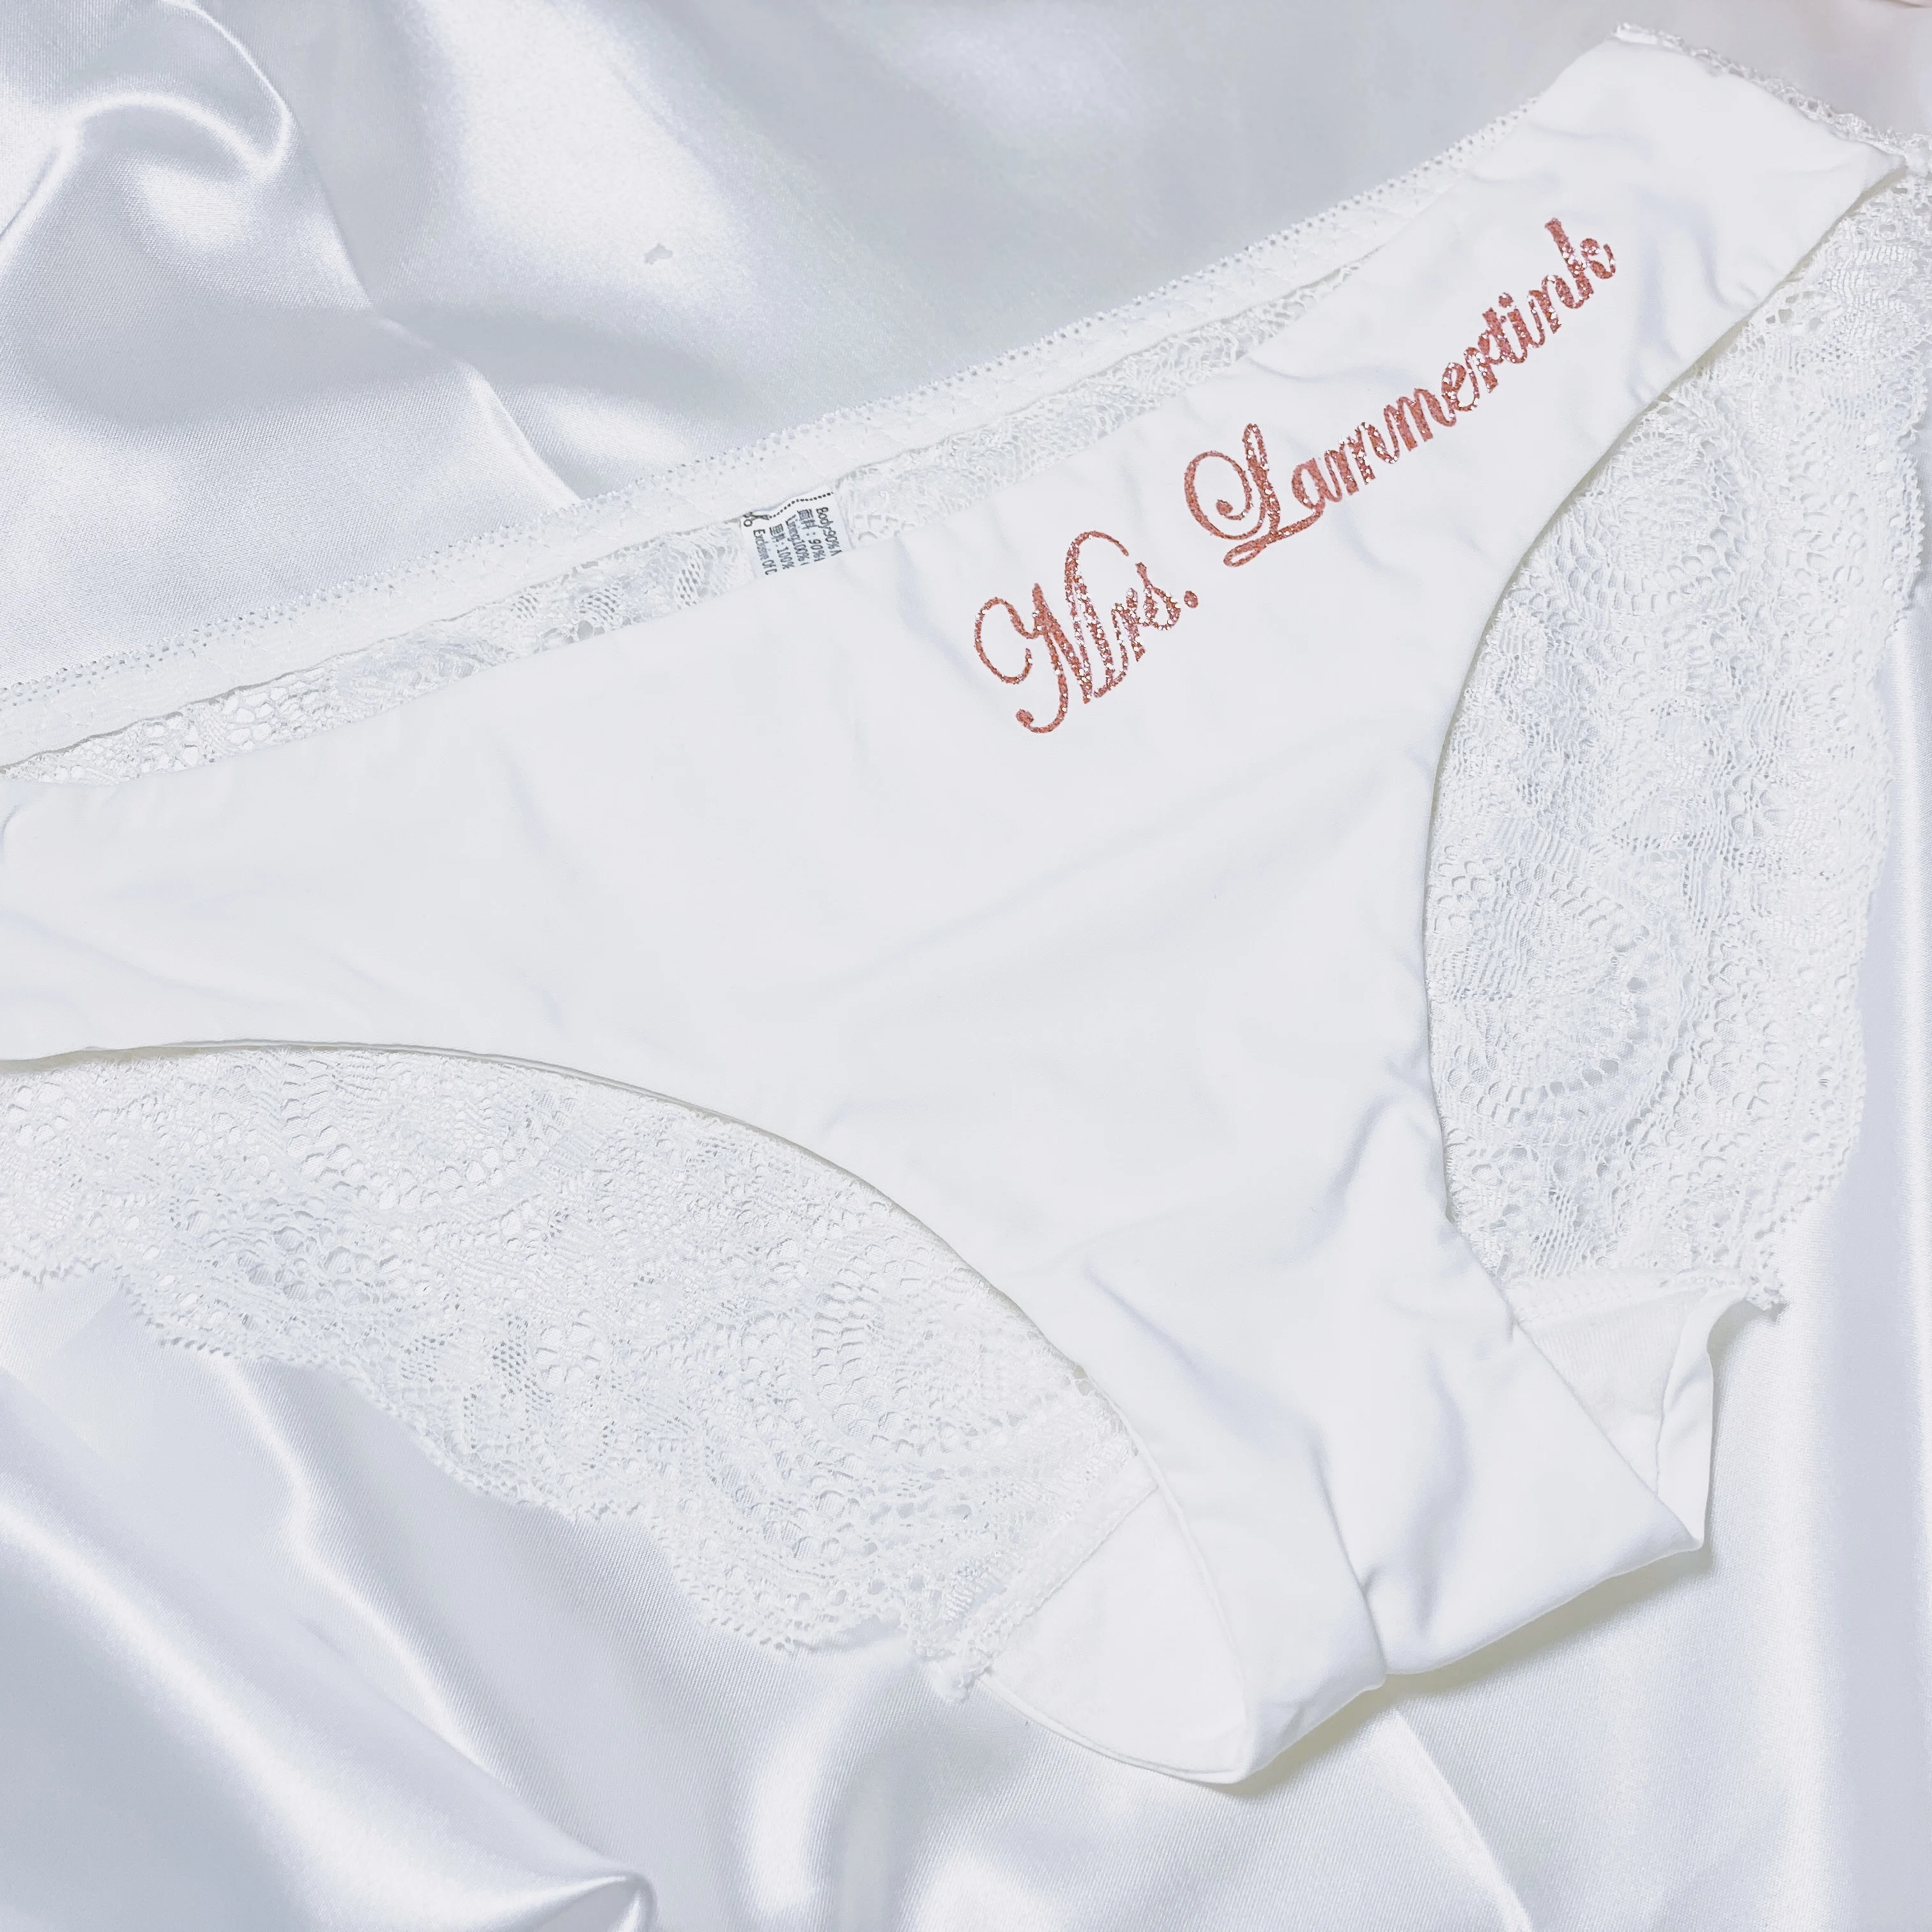 Personalized Wedding Underwear  Bride Underwear Personalized - Lace Panties  Mrs. - Aliexpress